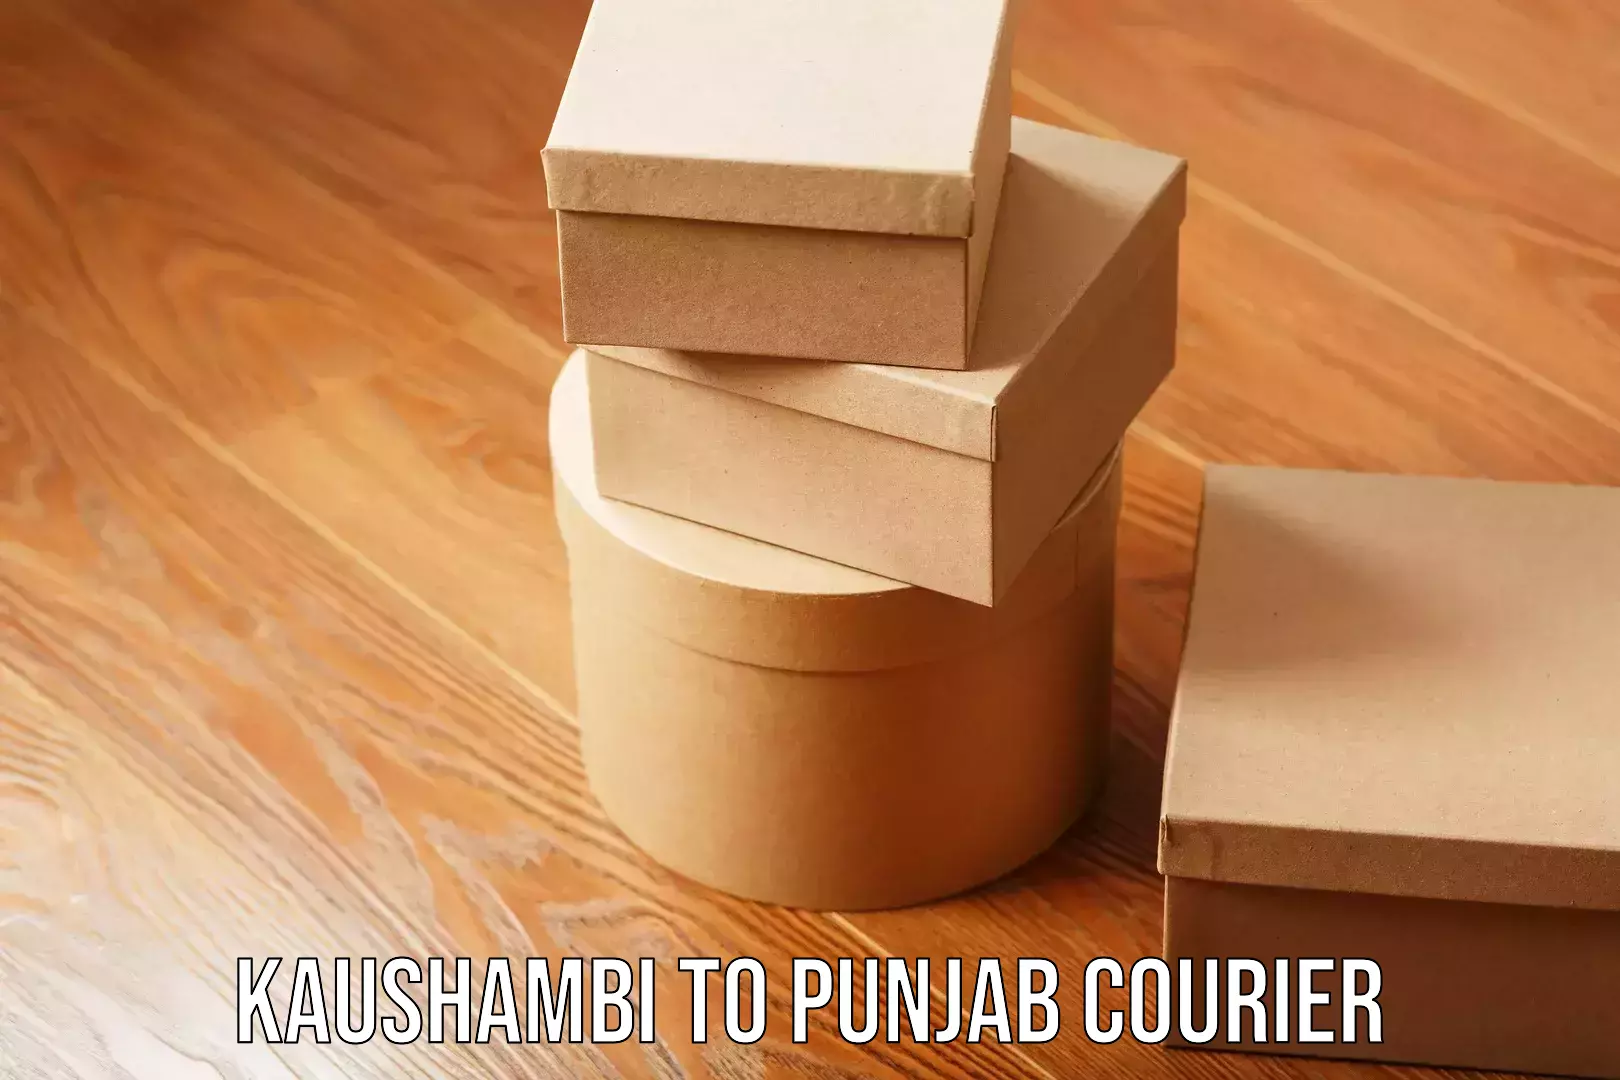 Furniture moving specialists Kaushambi to Punjab